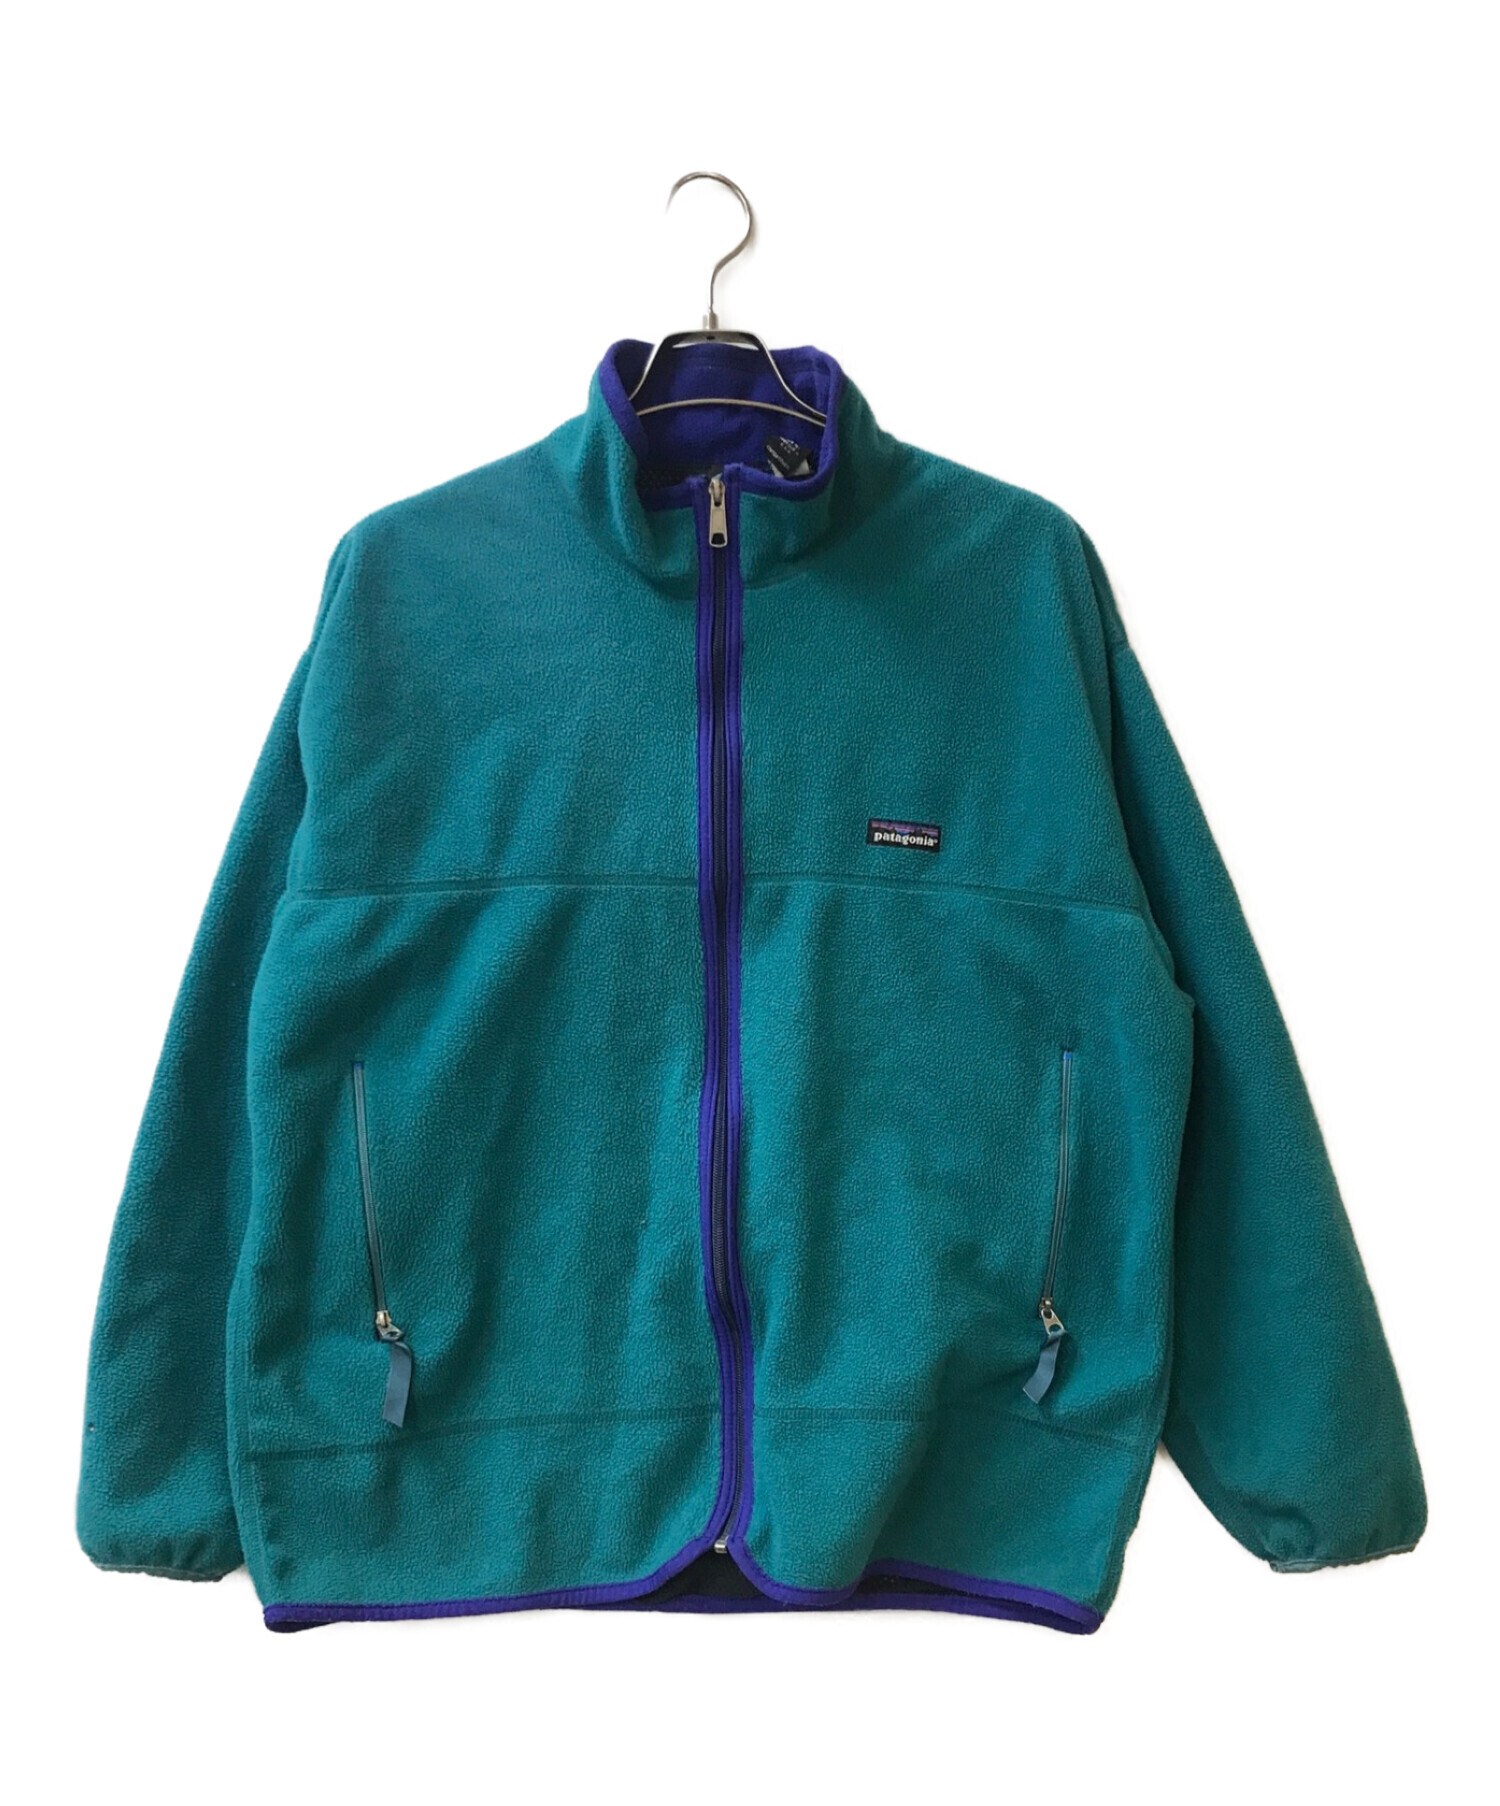 Patagonia (パタゴニア) フリースジャケット グリーン サイズ:XL